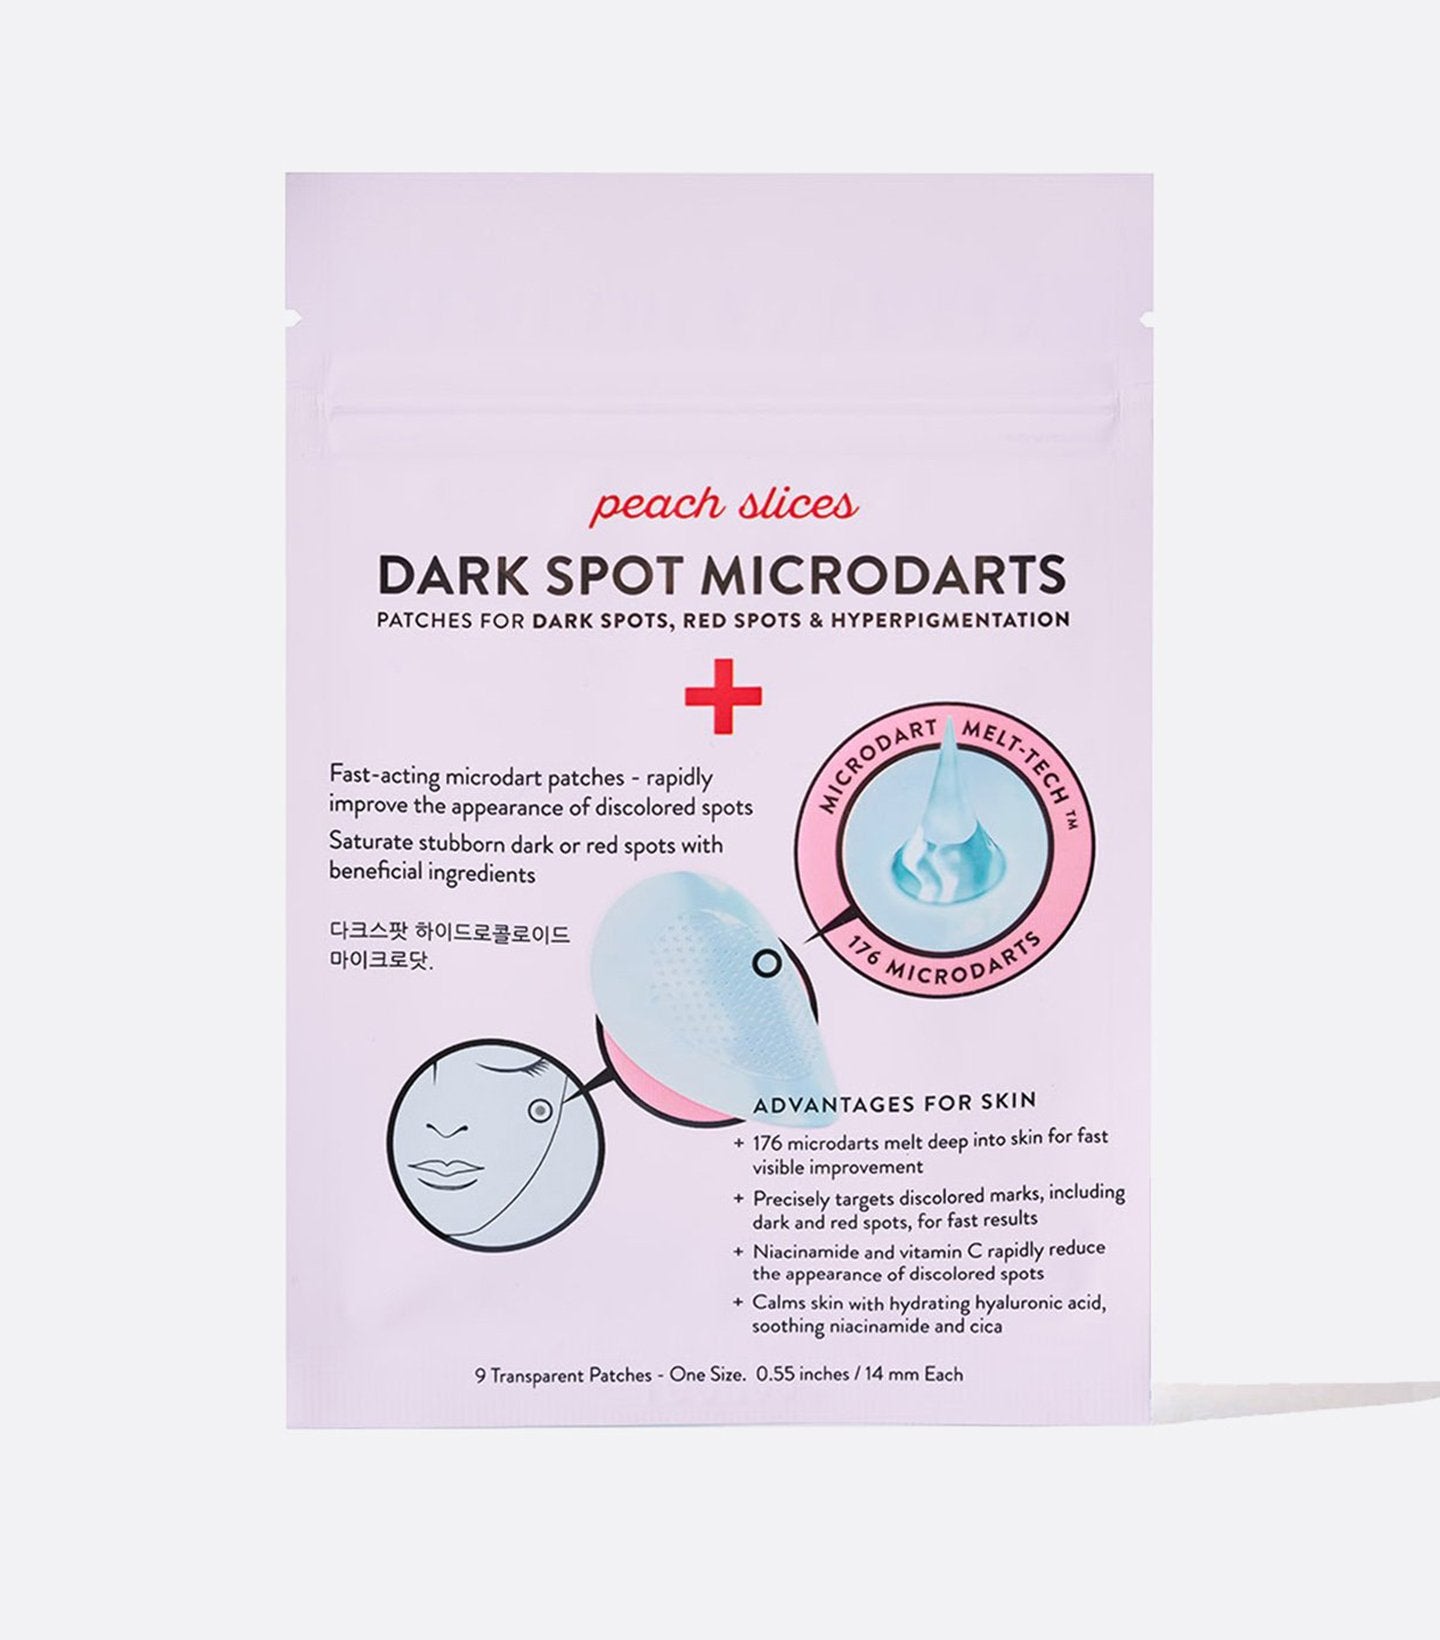 Dark Spot Microdarts